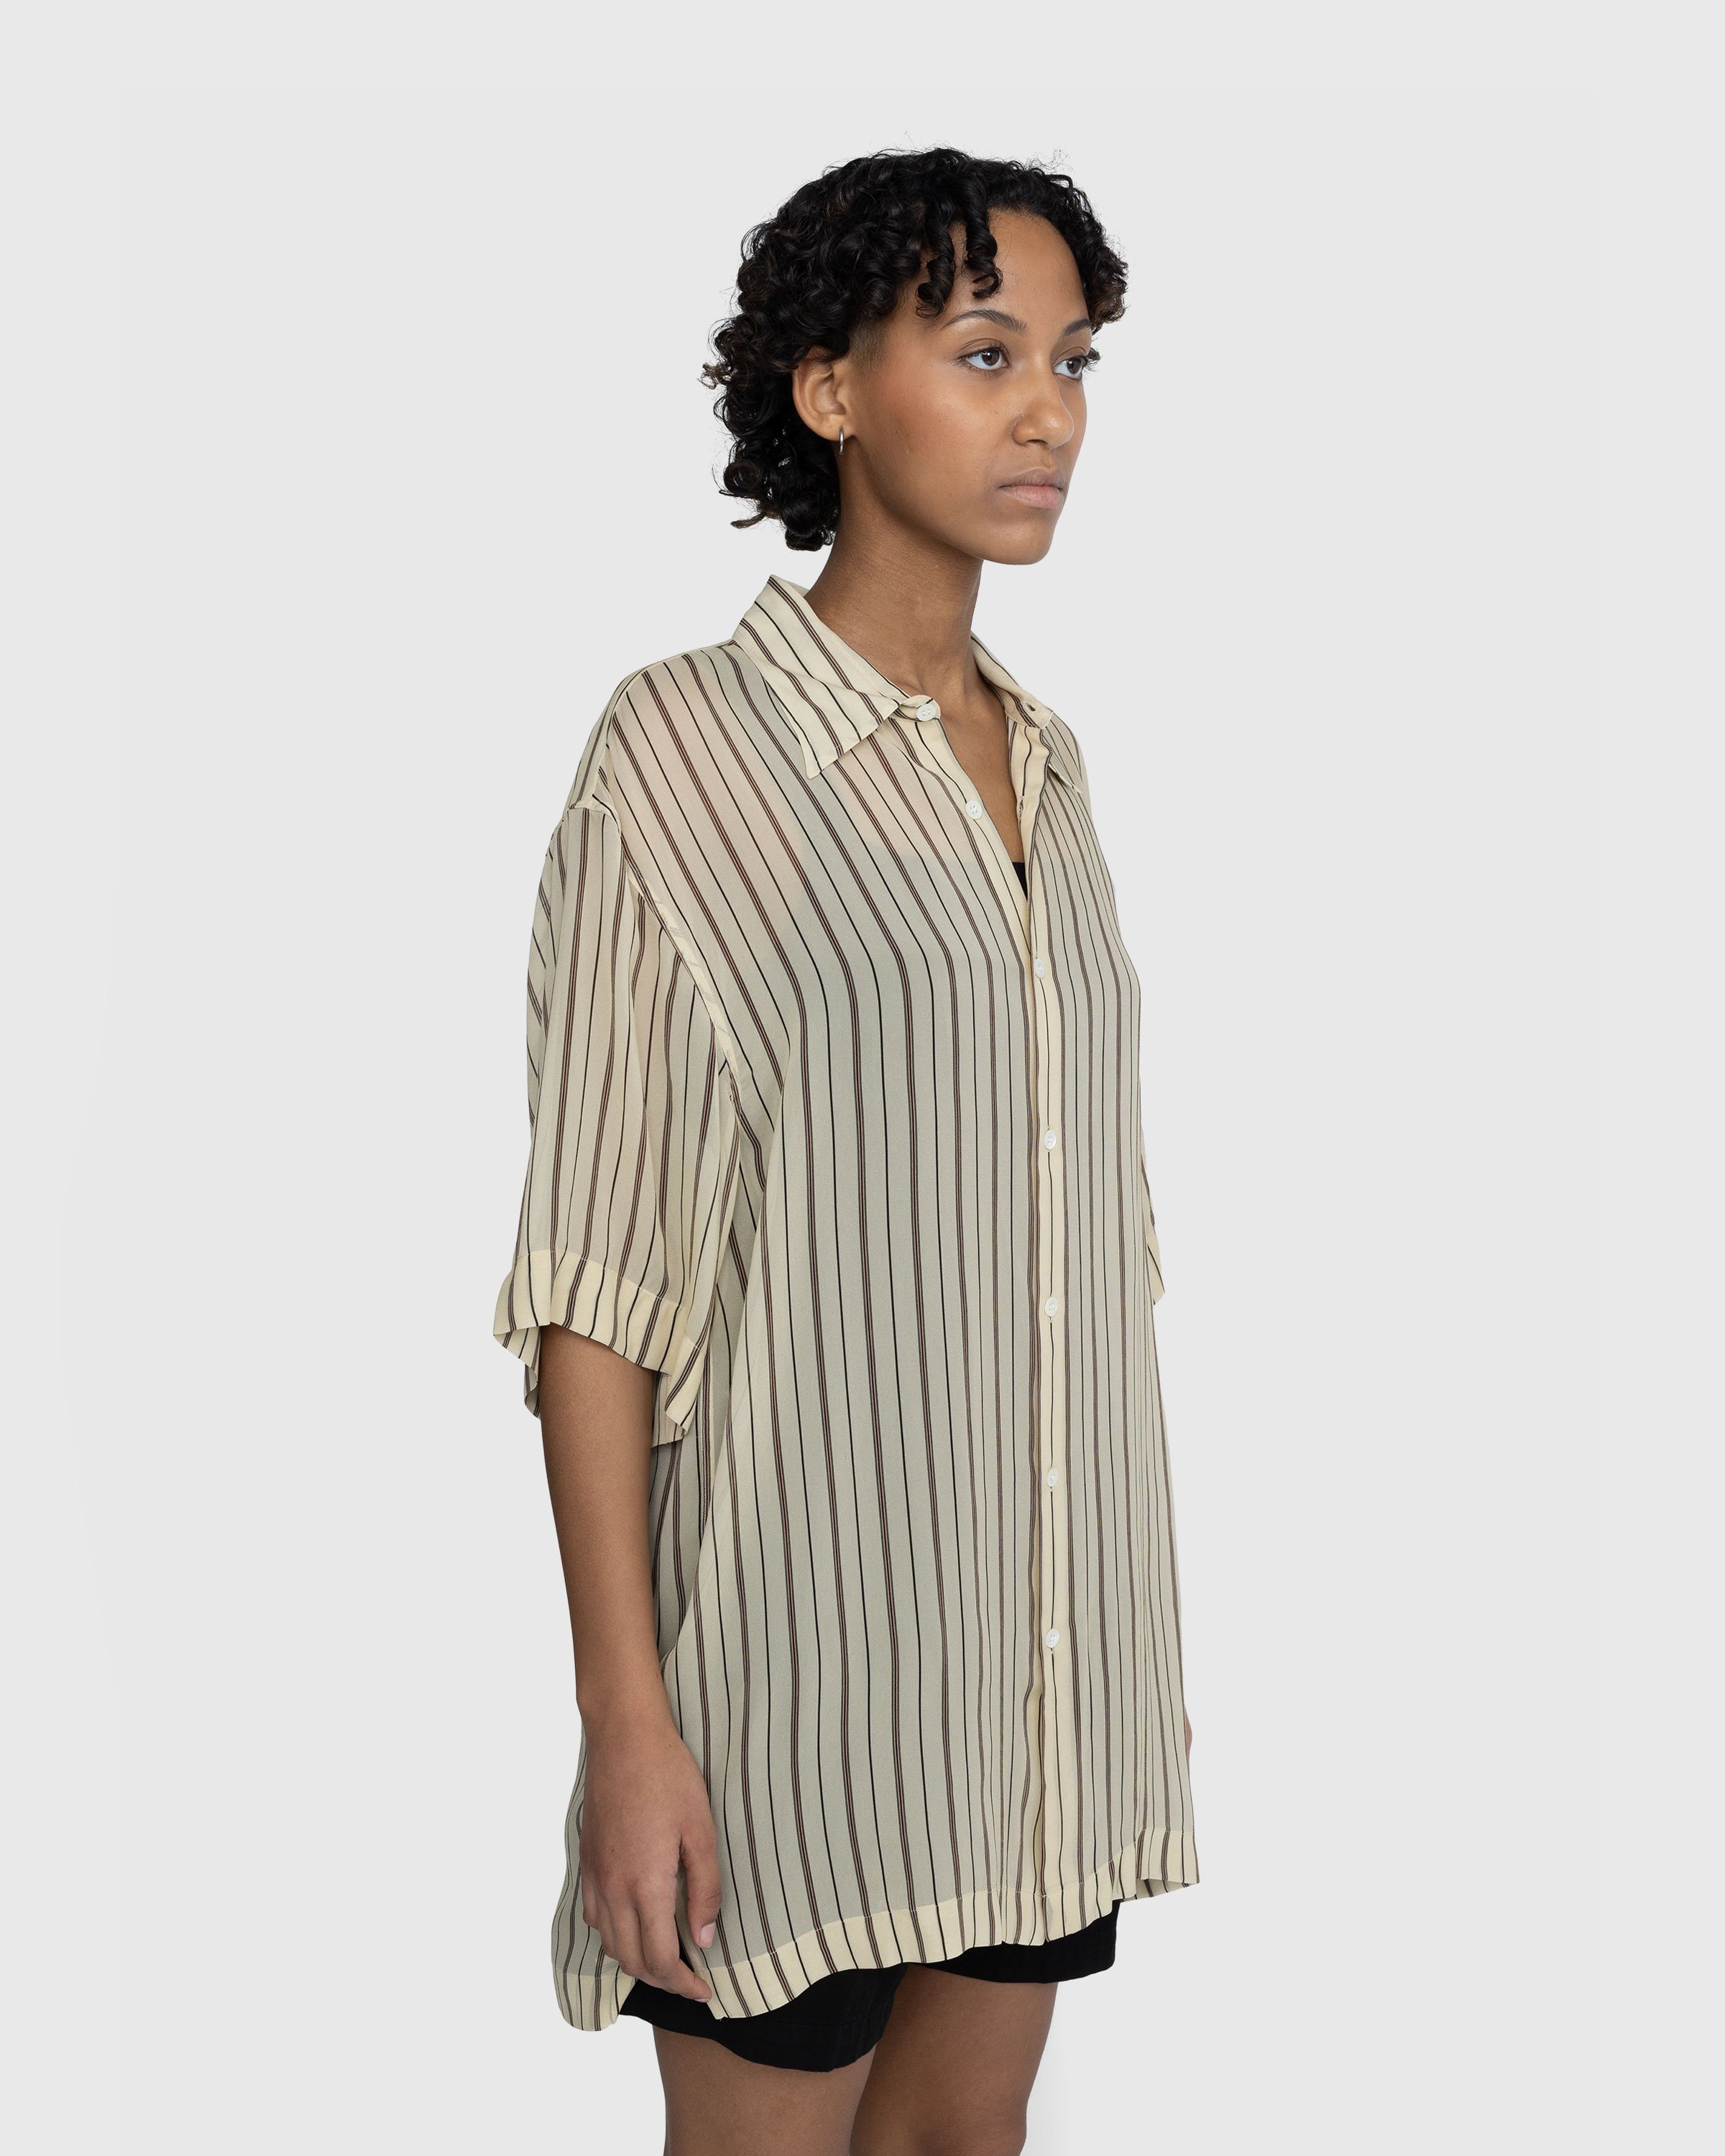 Dries van Noten - Cassidye Shirt Ecru - Clothing - Beige - Image 4